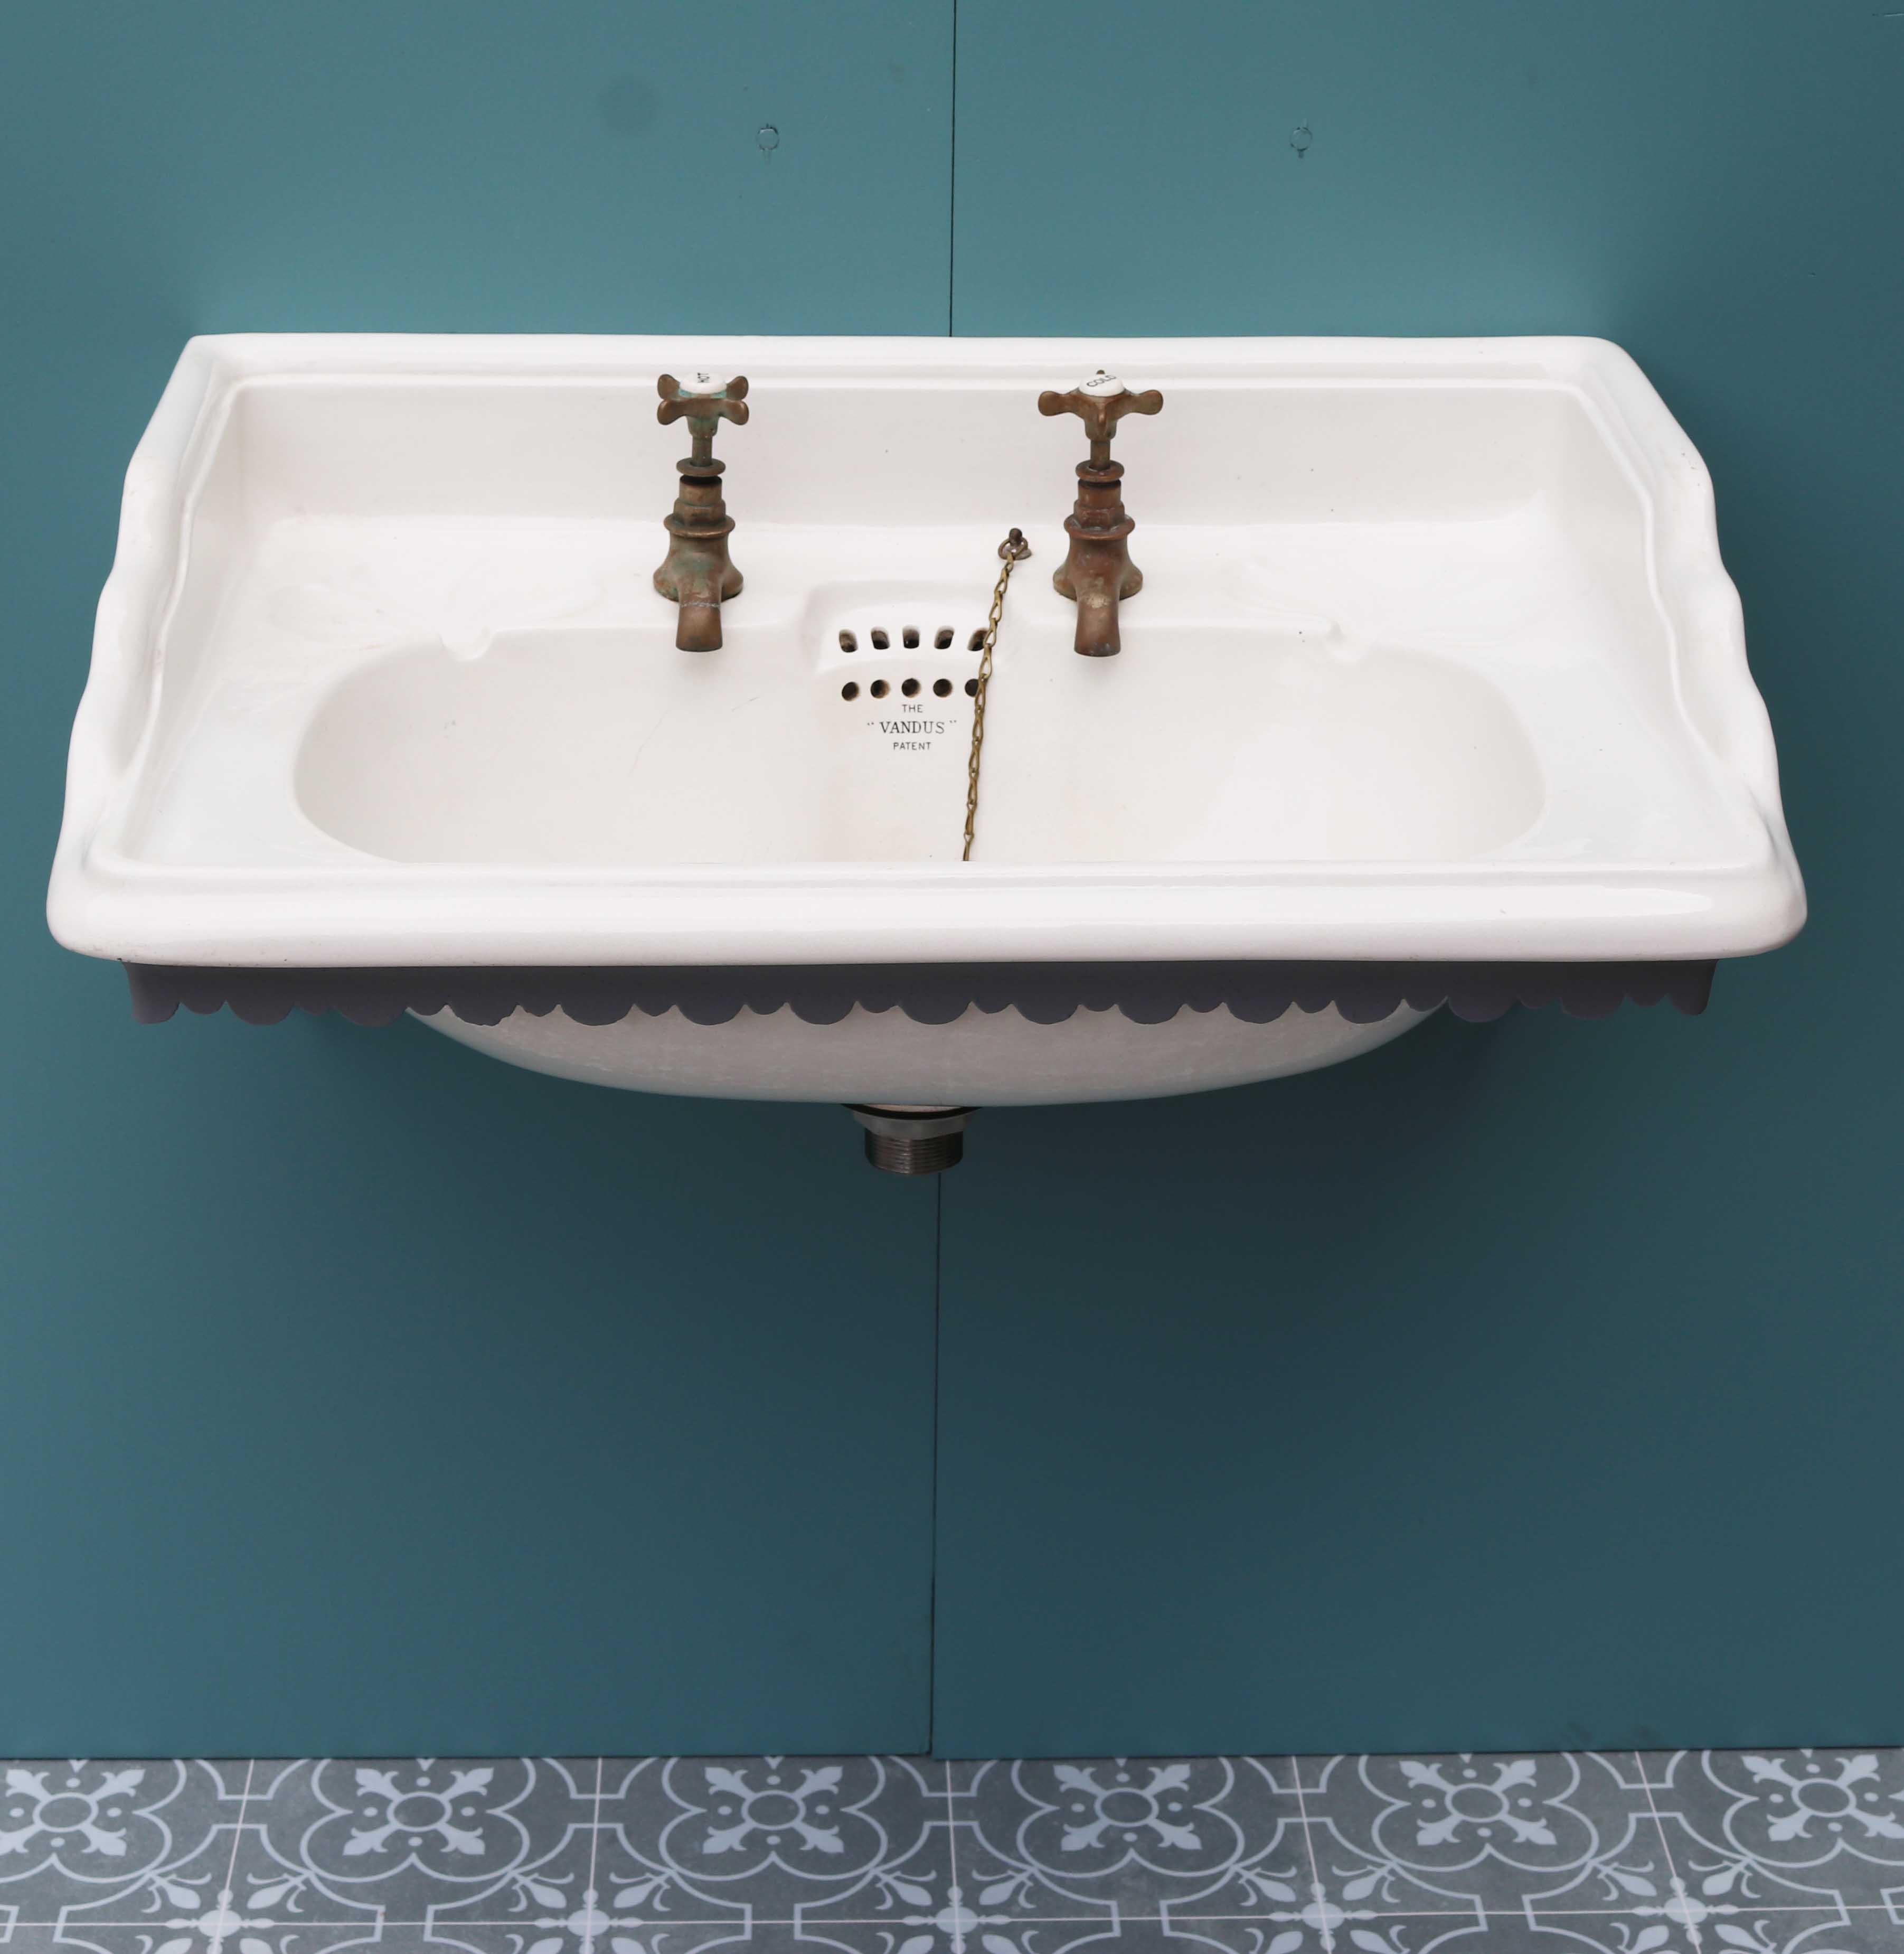 English Antique ‘Vandus’ Wall Mounted Sink/Basin